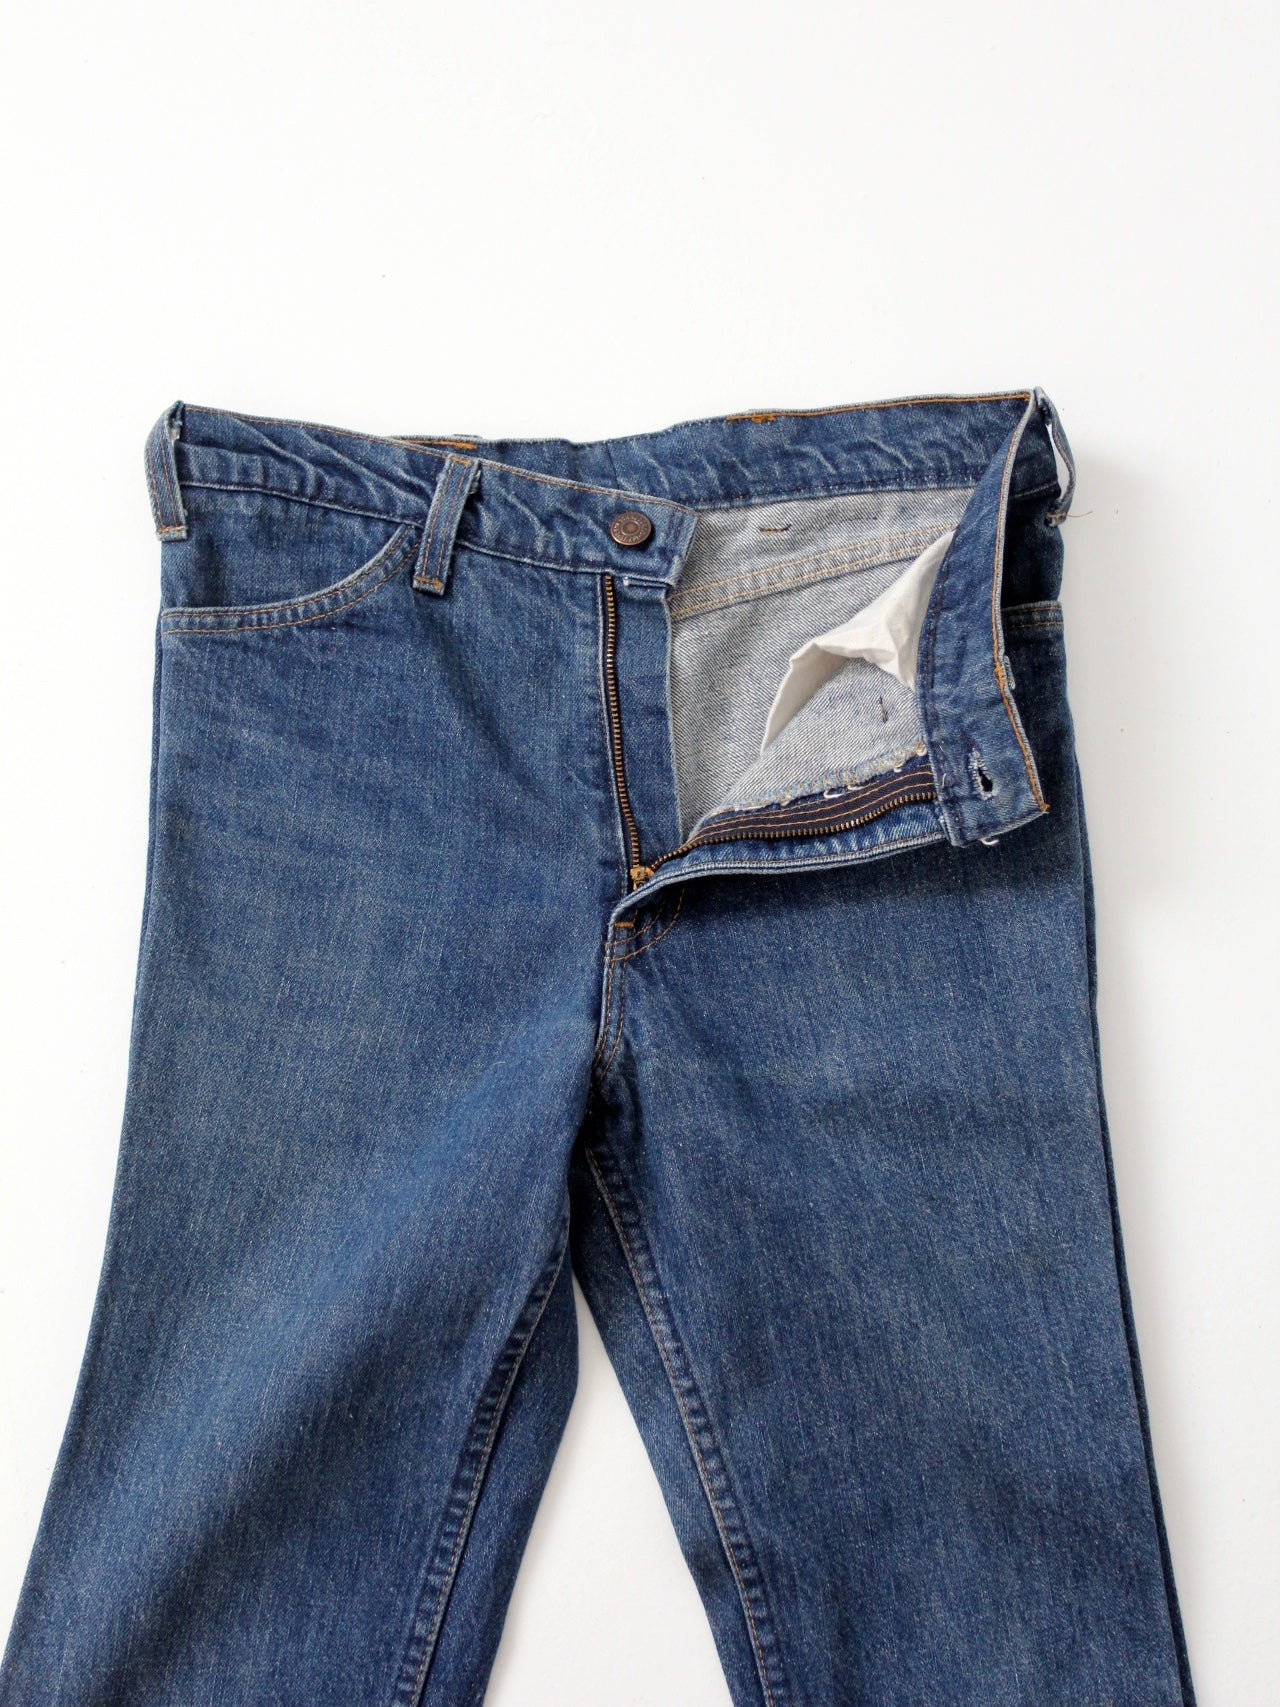 vintage Levis jeans zipper fly